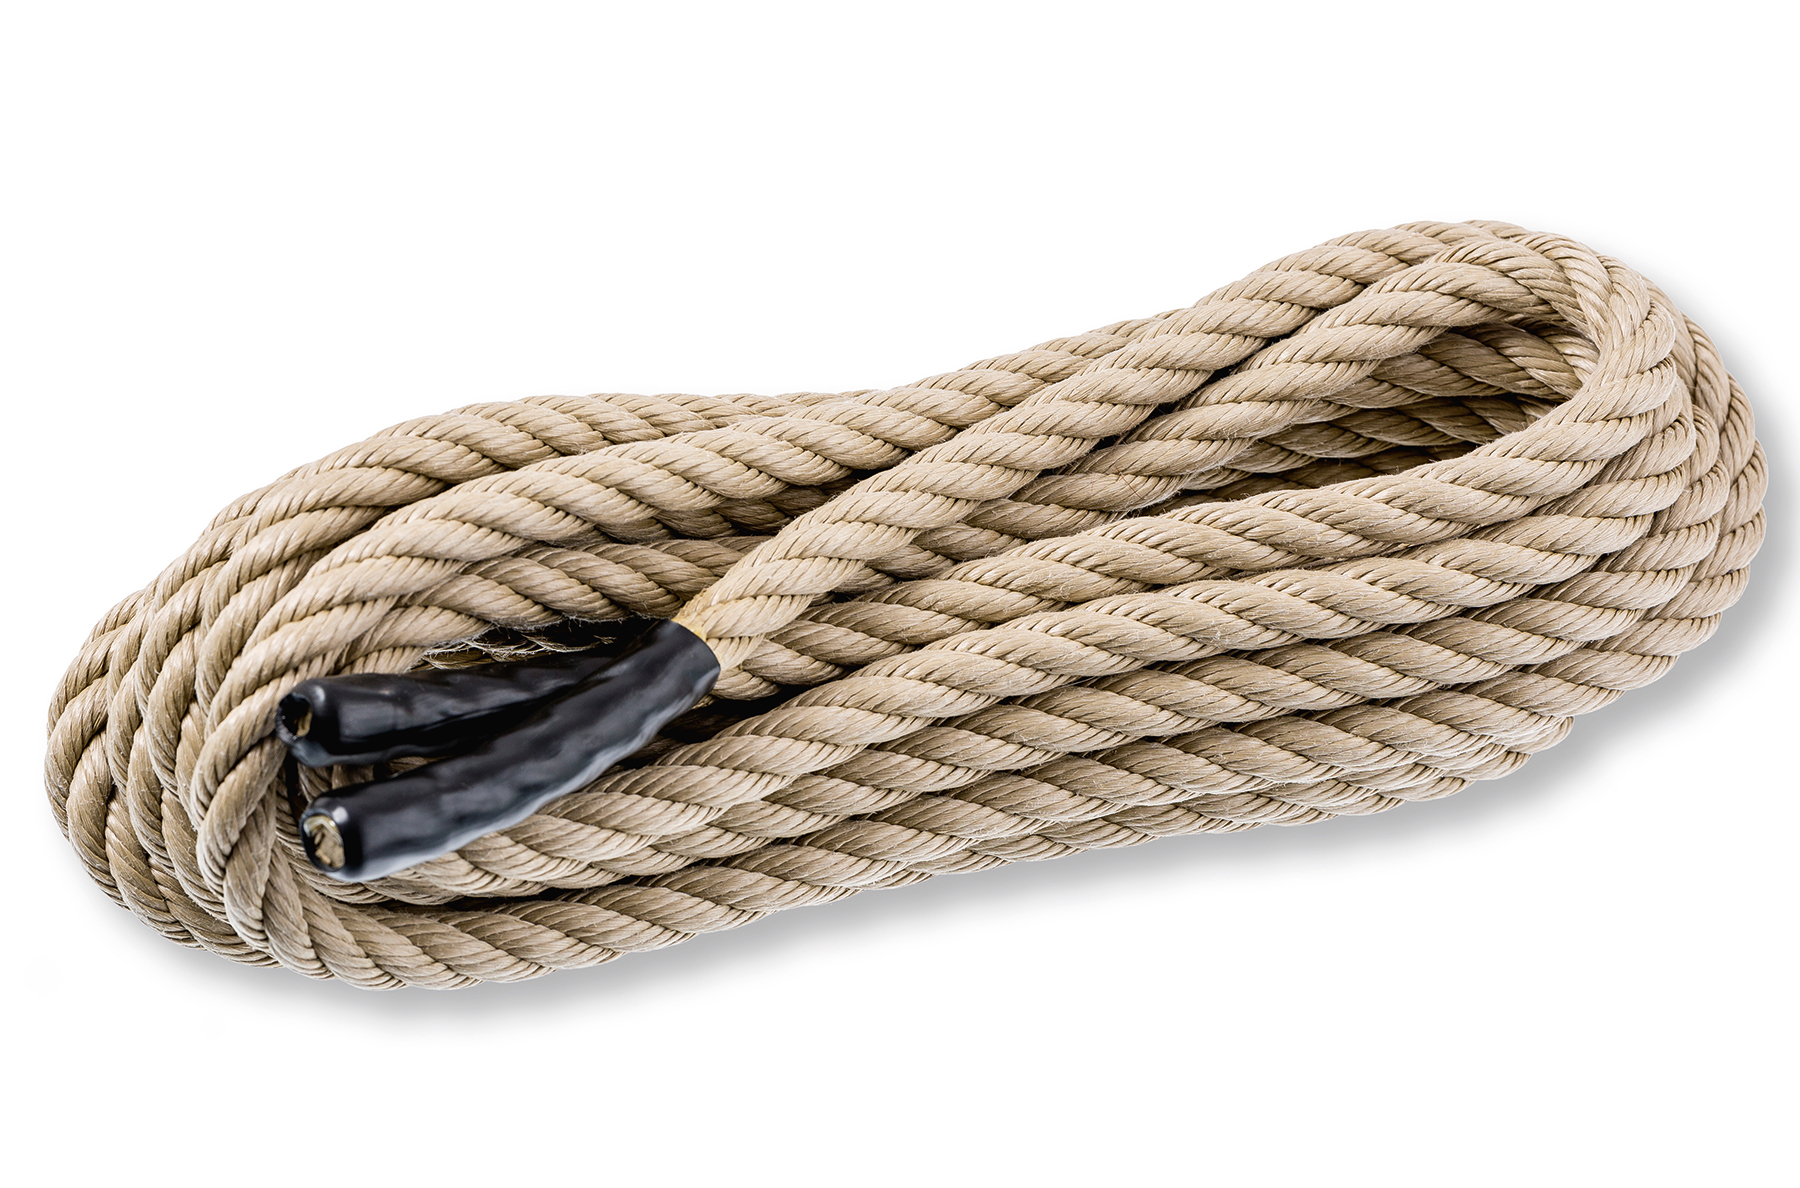 Tug of war rope, 15 m long - Huck